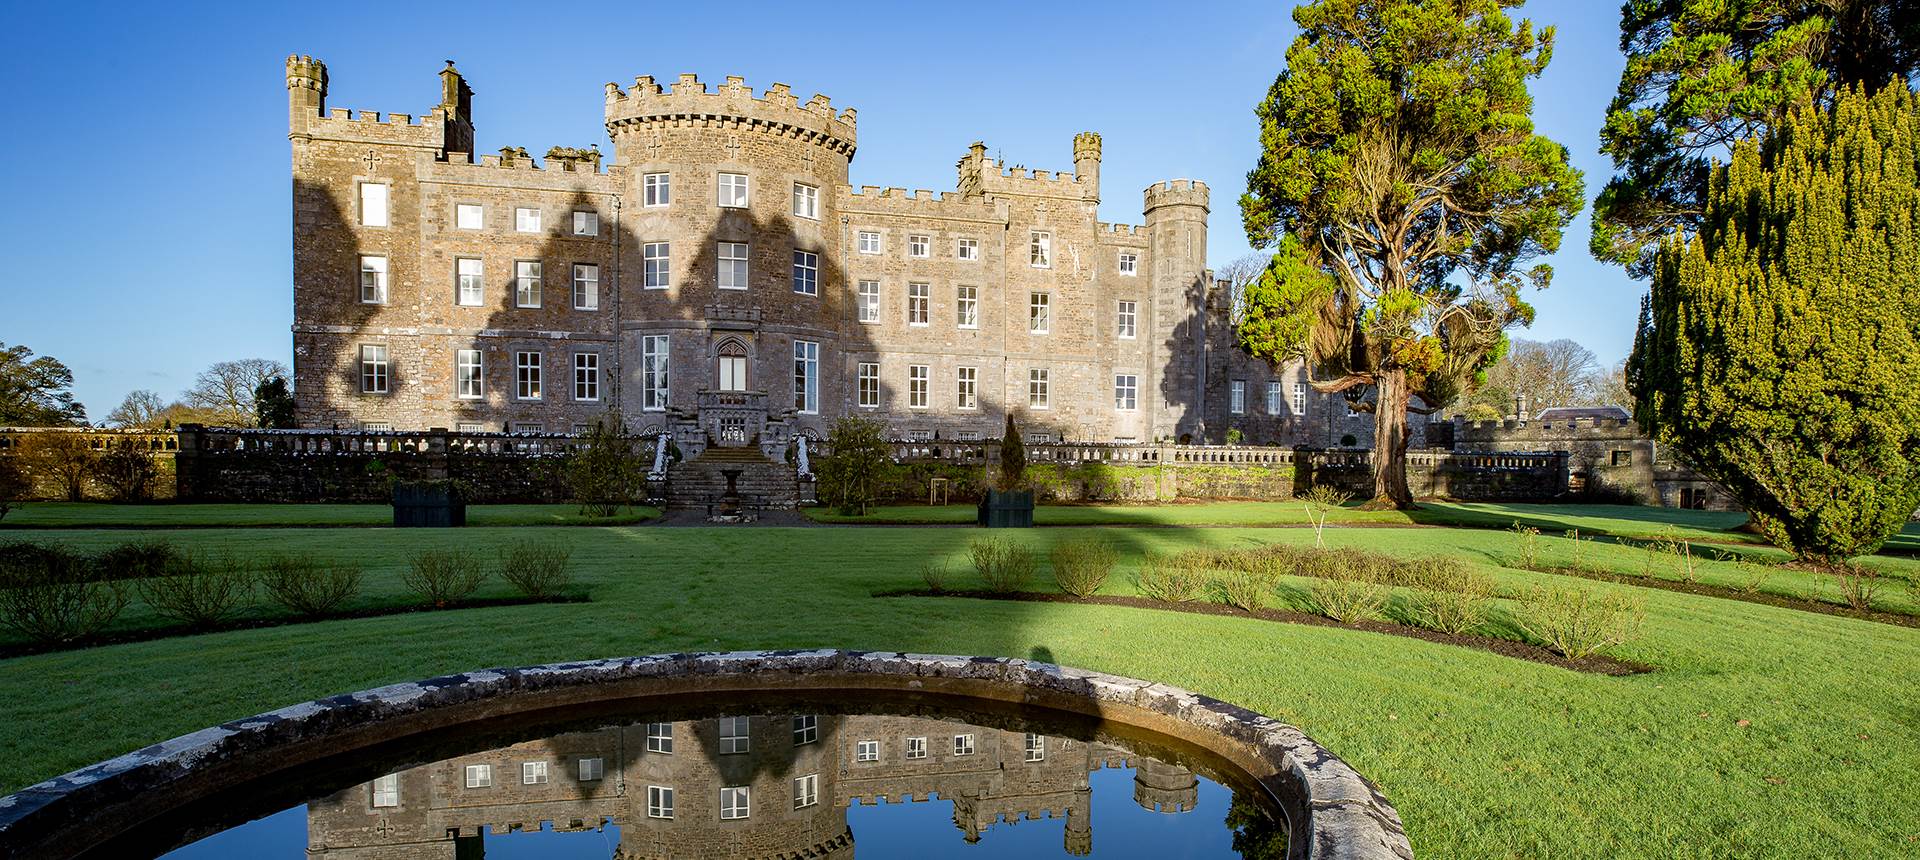 Markree Castle Galway Ireland